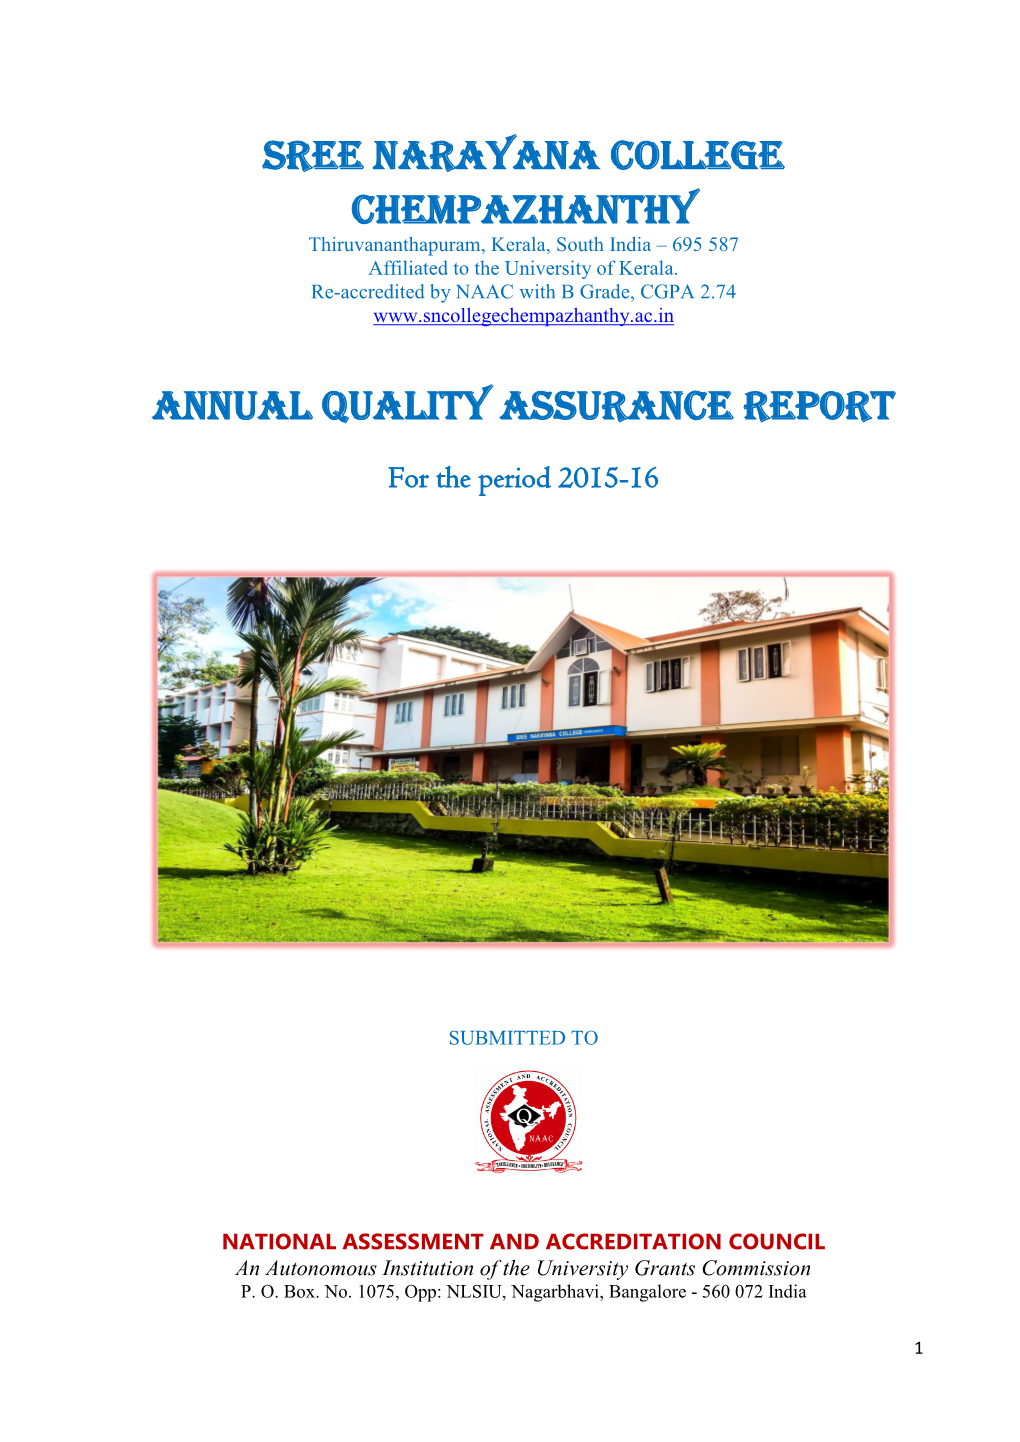 SREE NARAYANA COLLEGE CHEMPAZHANTHY Annual Quality Assurance Report